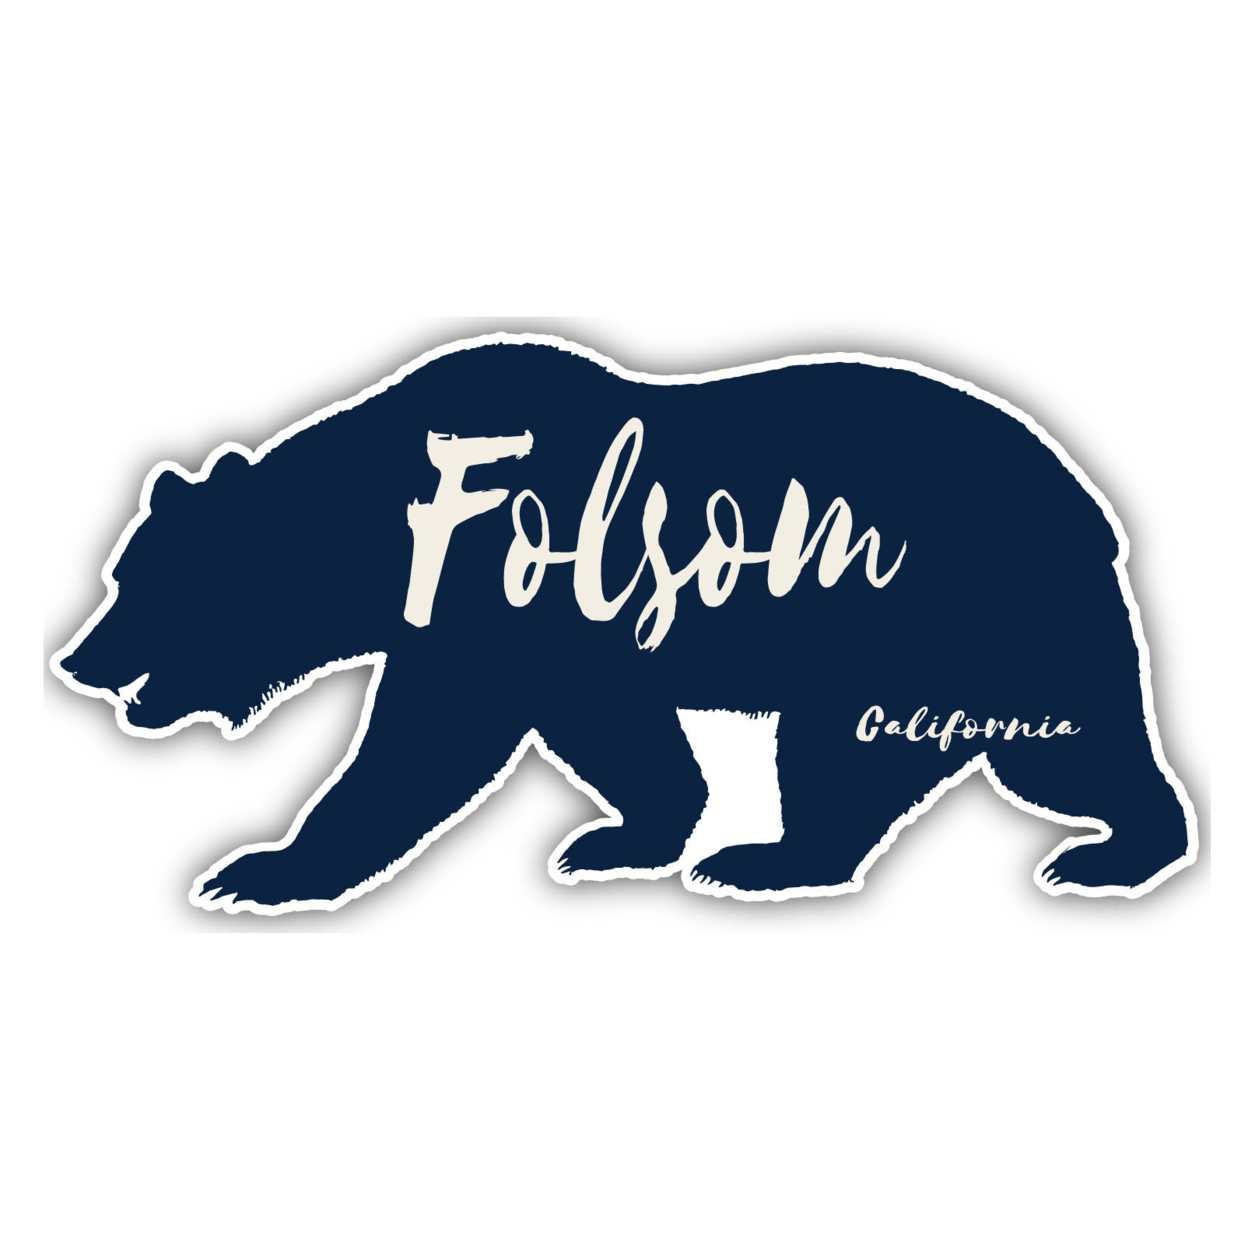 Folsom California Souvenir Decorative Stickers (Choose Theme And Size) - Single Unit, 6-Inch, Tent